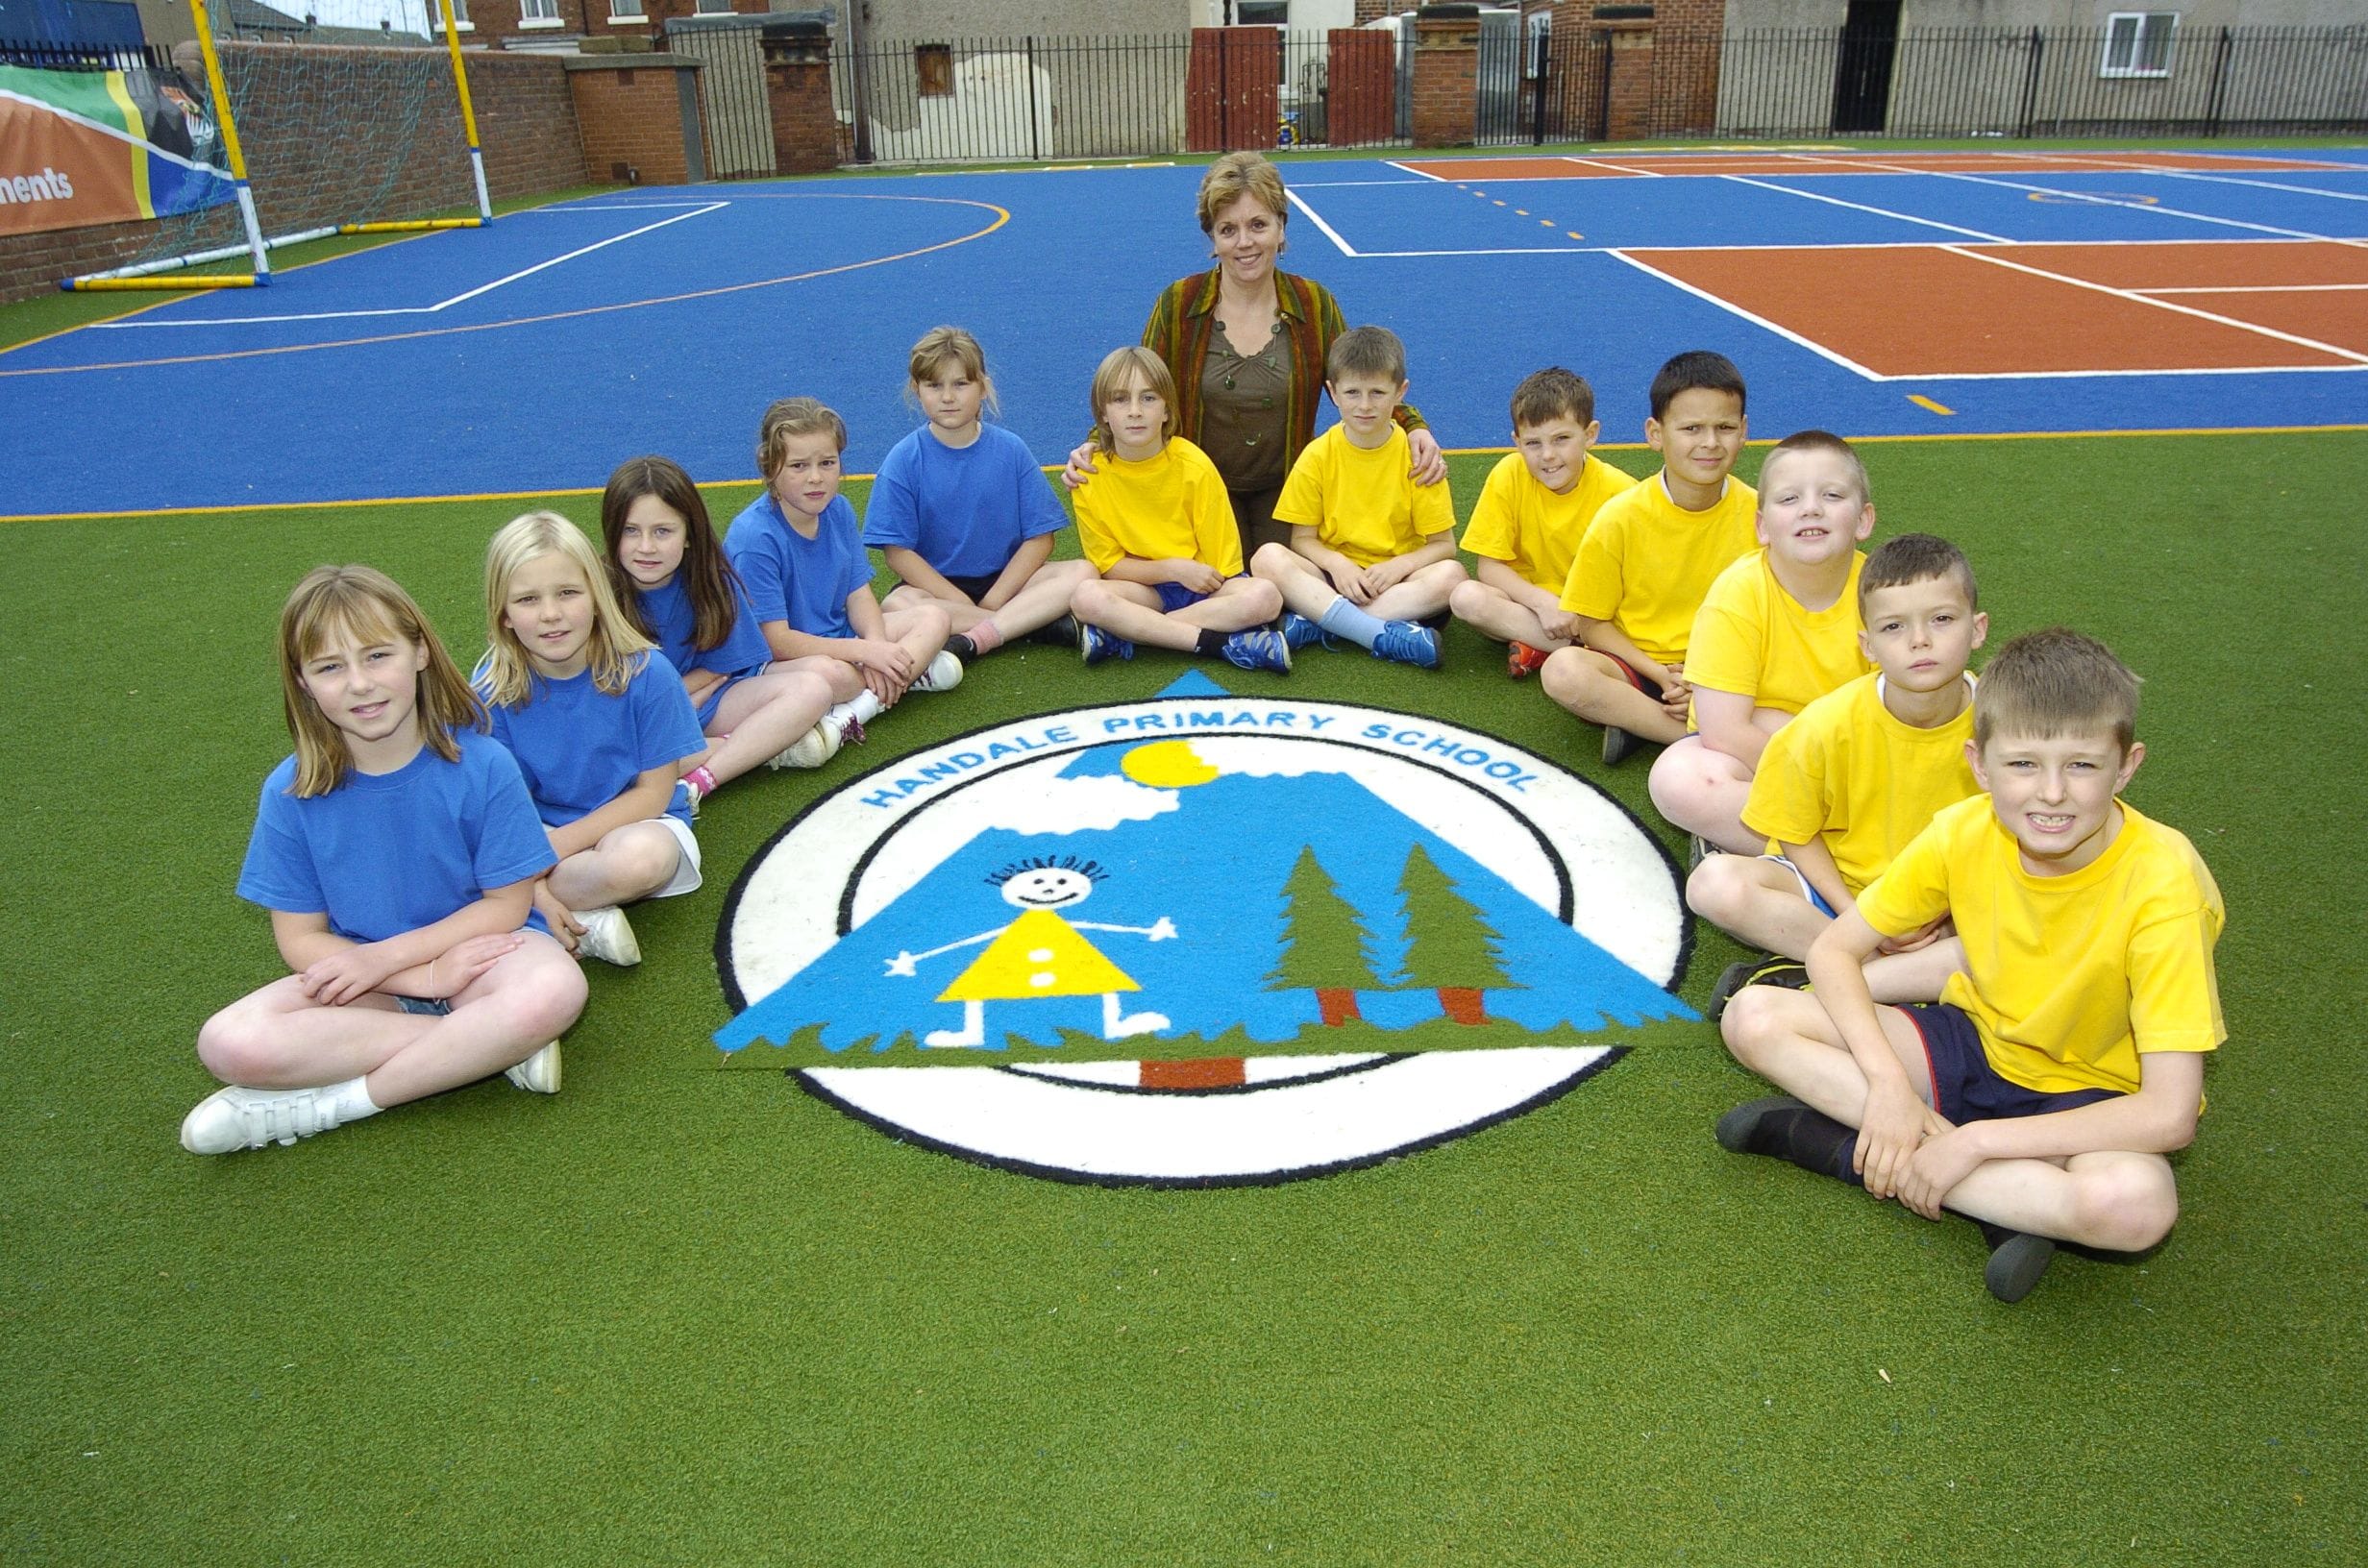 pupils sat on playground surface next to their school logo